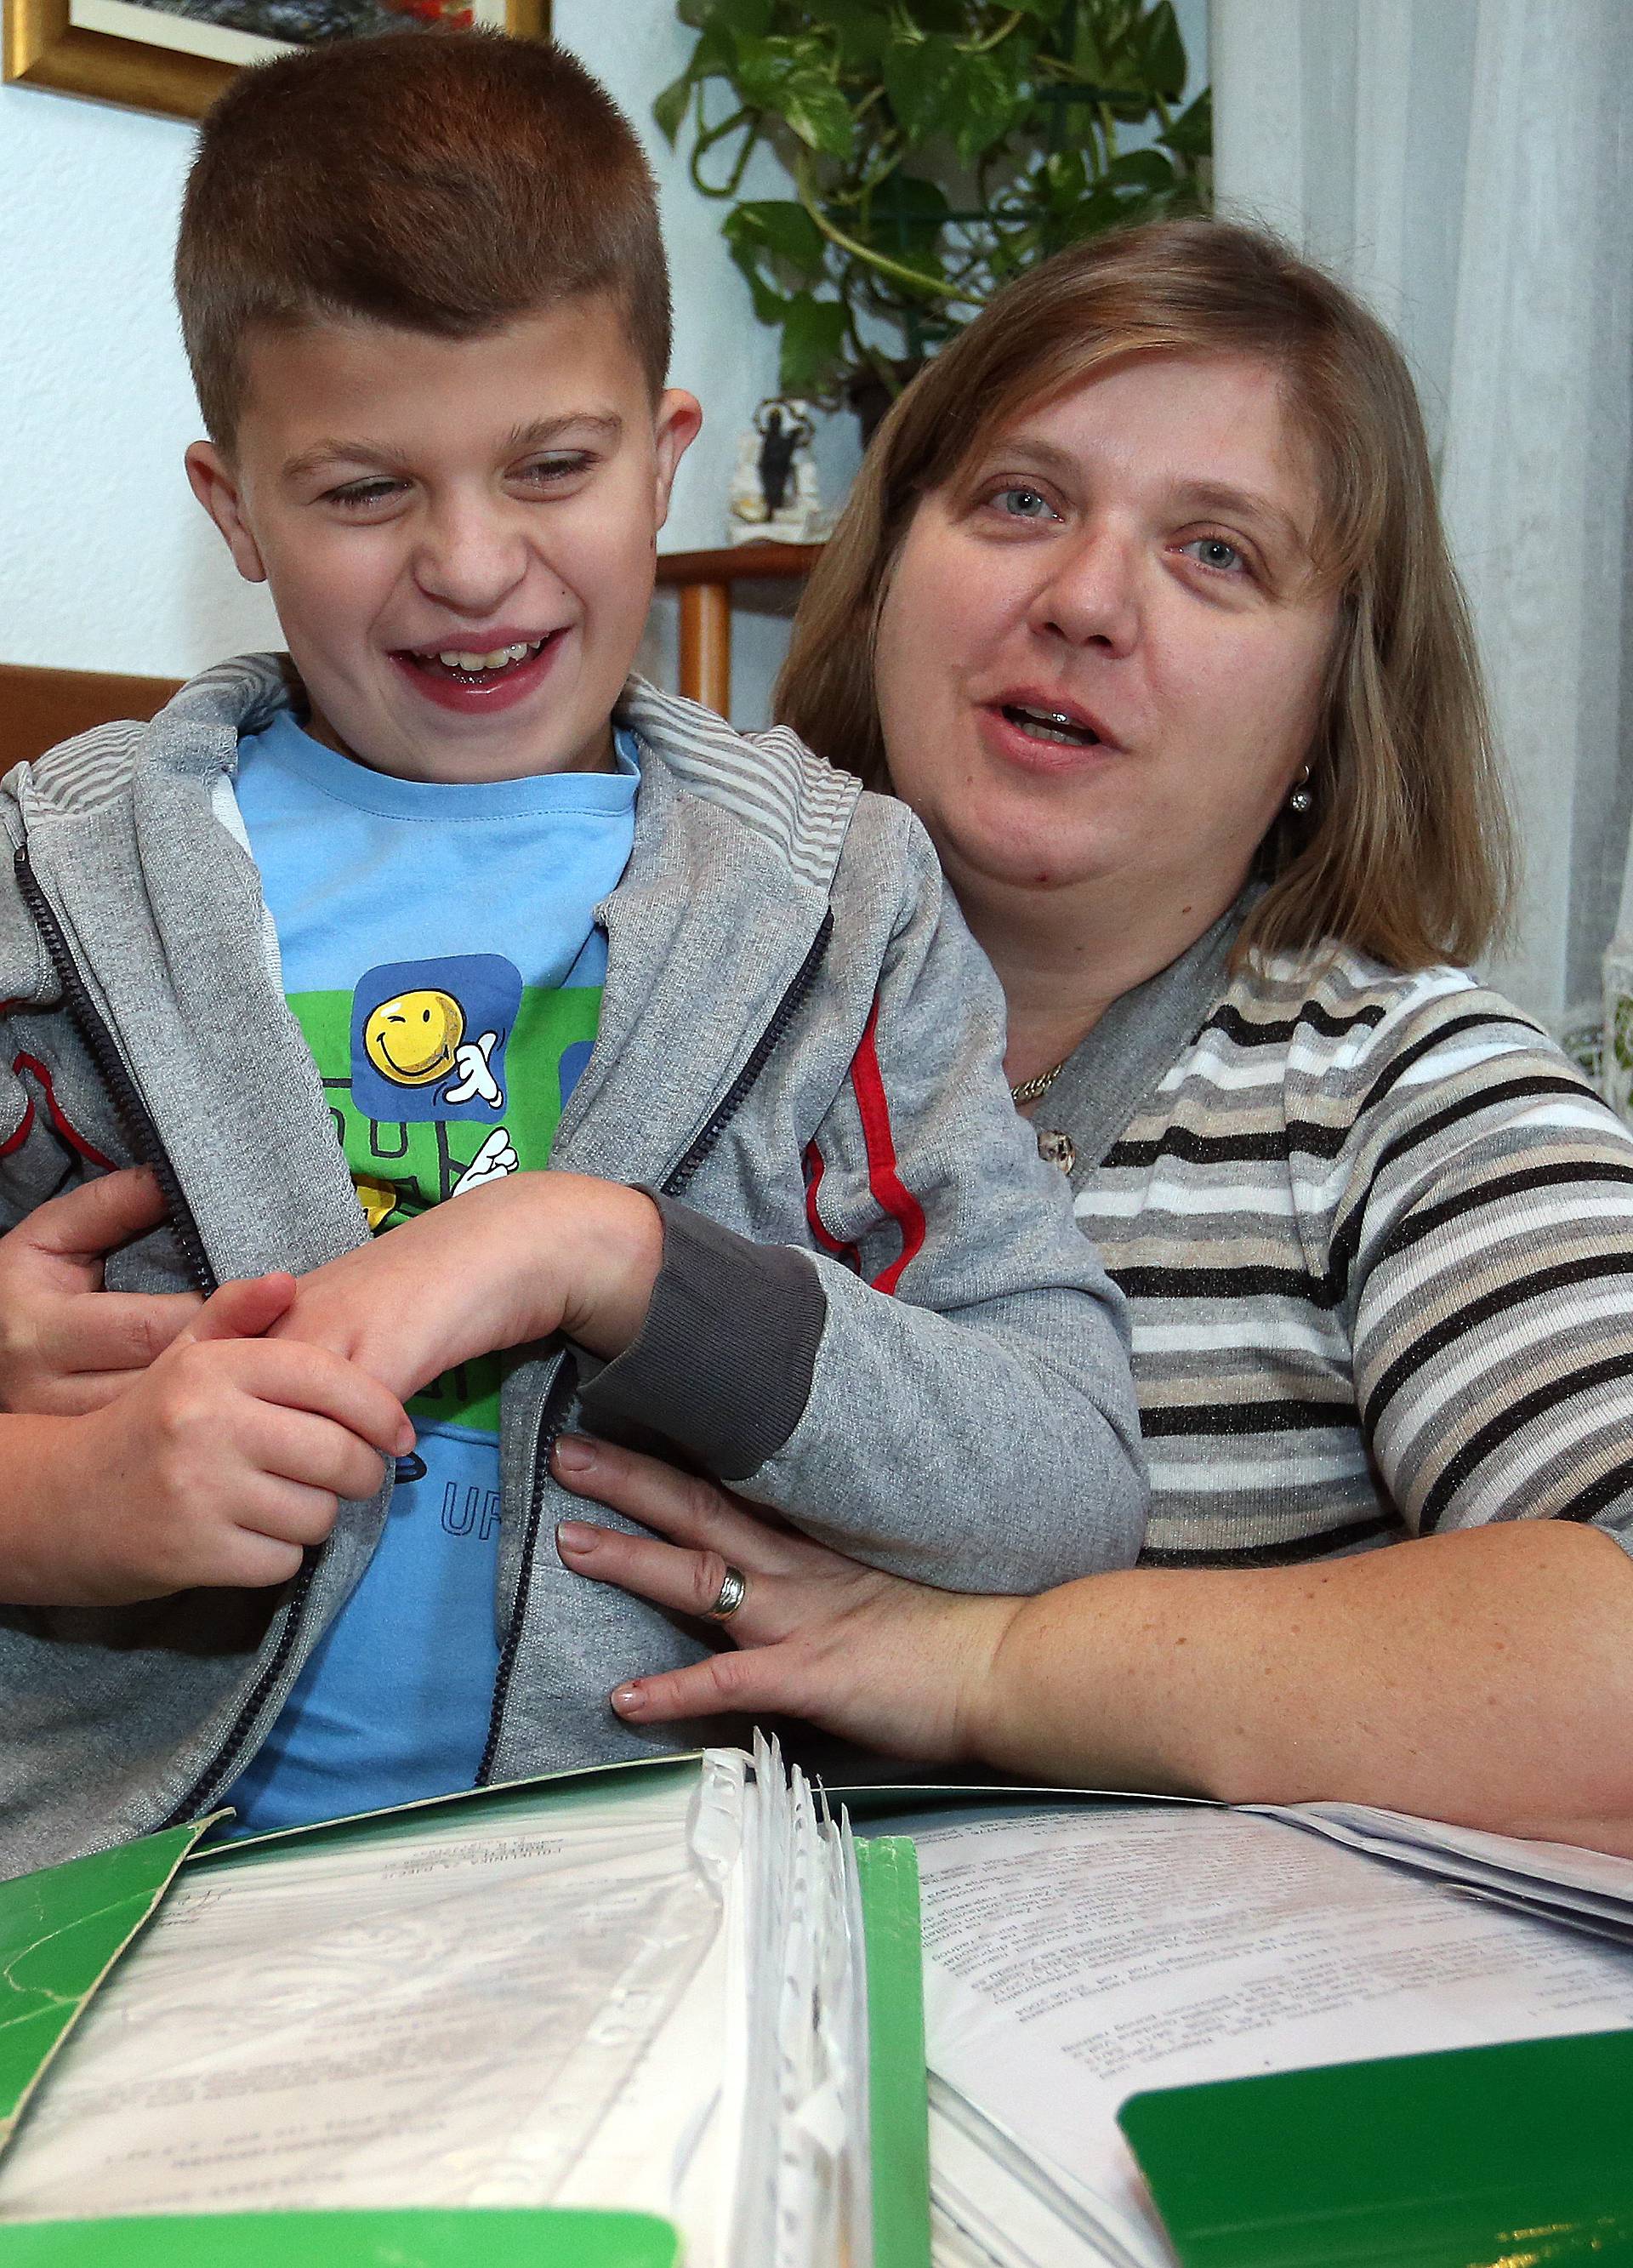 Apsurd: 'Moj sin je bolestan, a moram to stalno dokazivati'